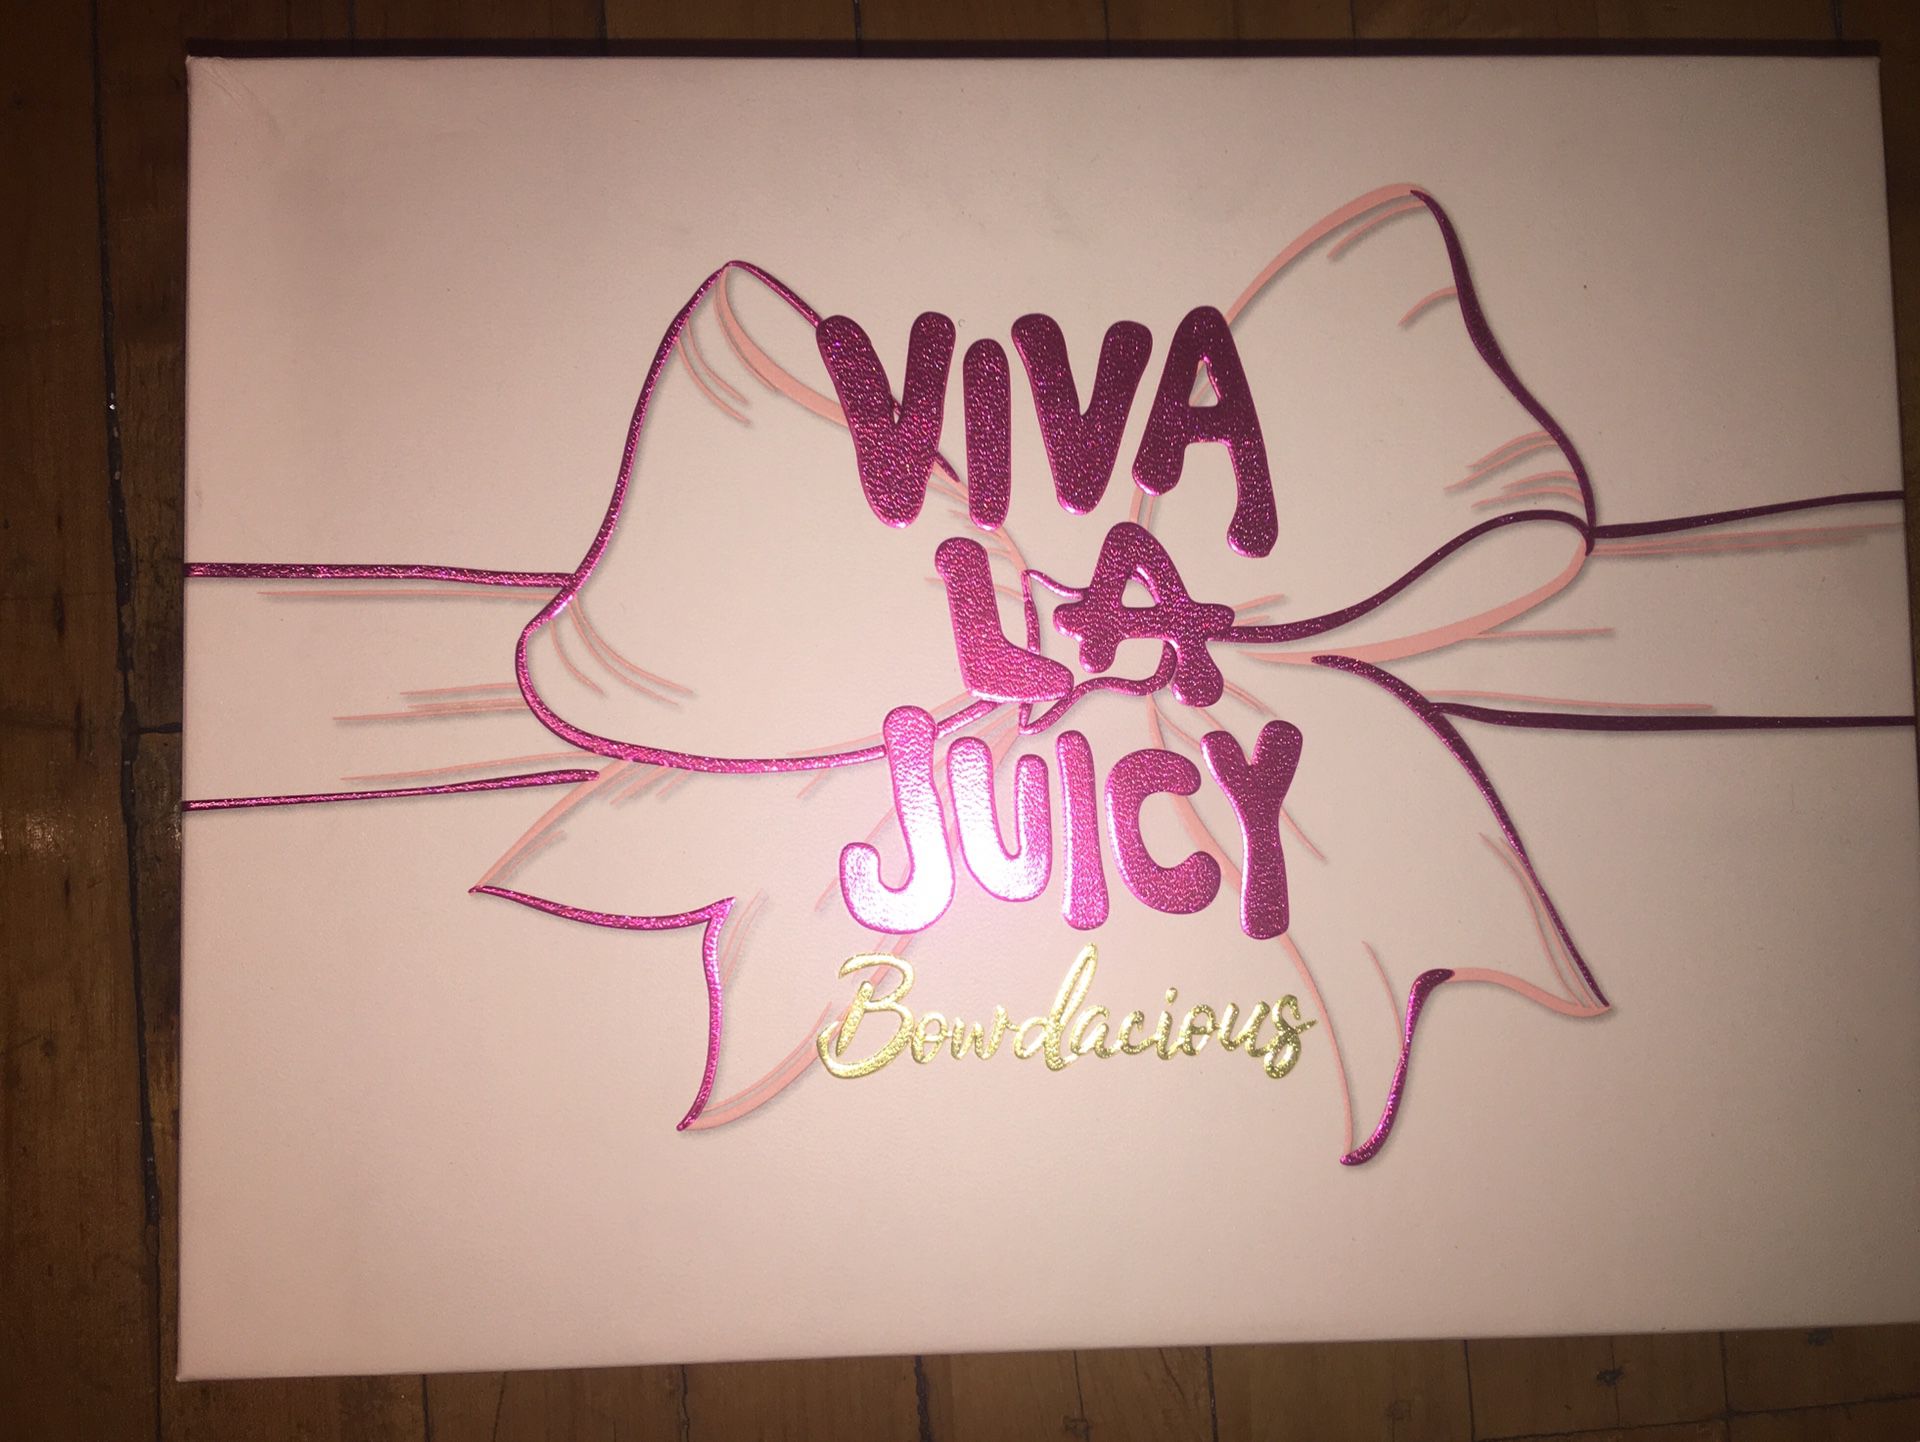 Viva La Juicy Bowdacious perfume